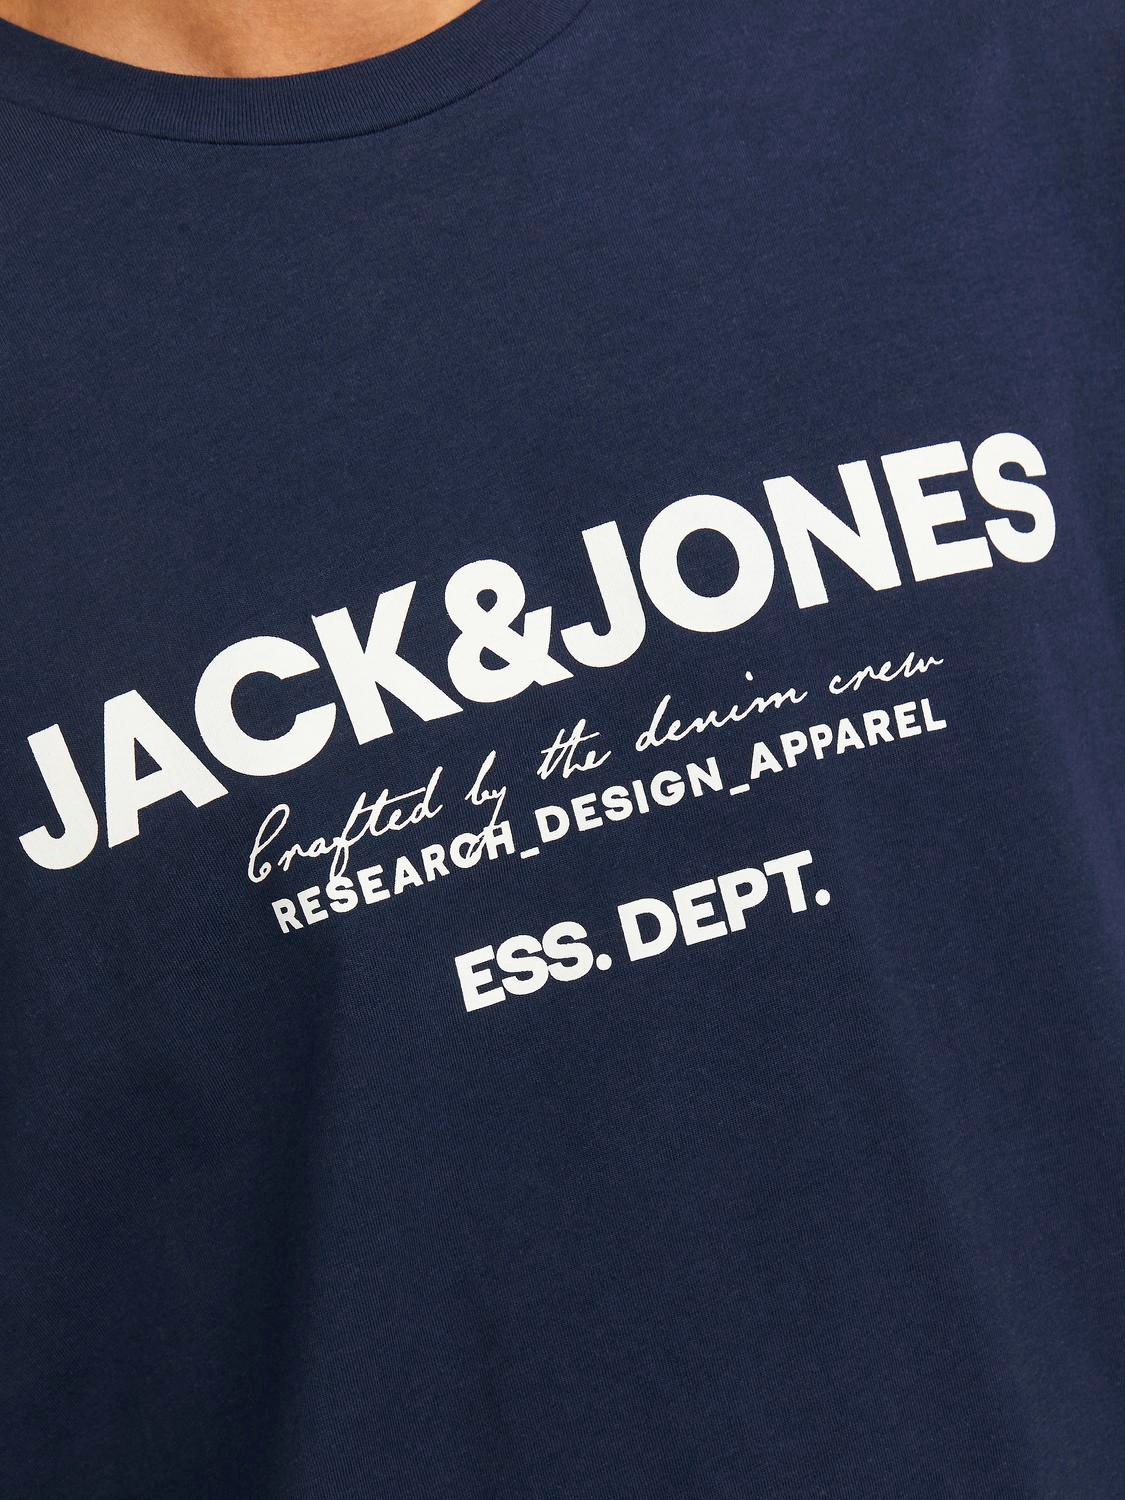 Jack & Jones Z logo Okrągły dekolt T-shirt -Navy Blazer - 12247782